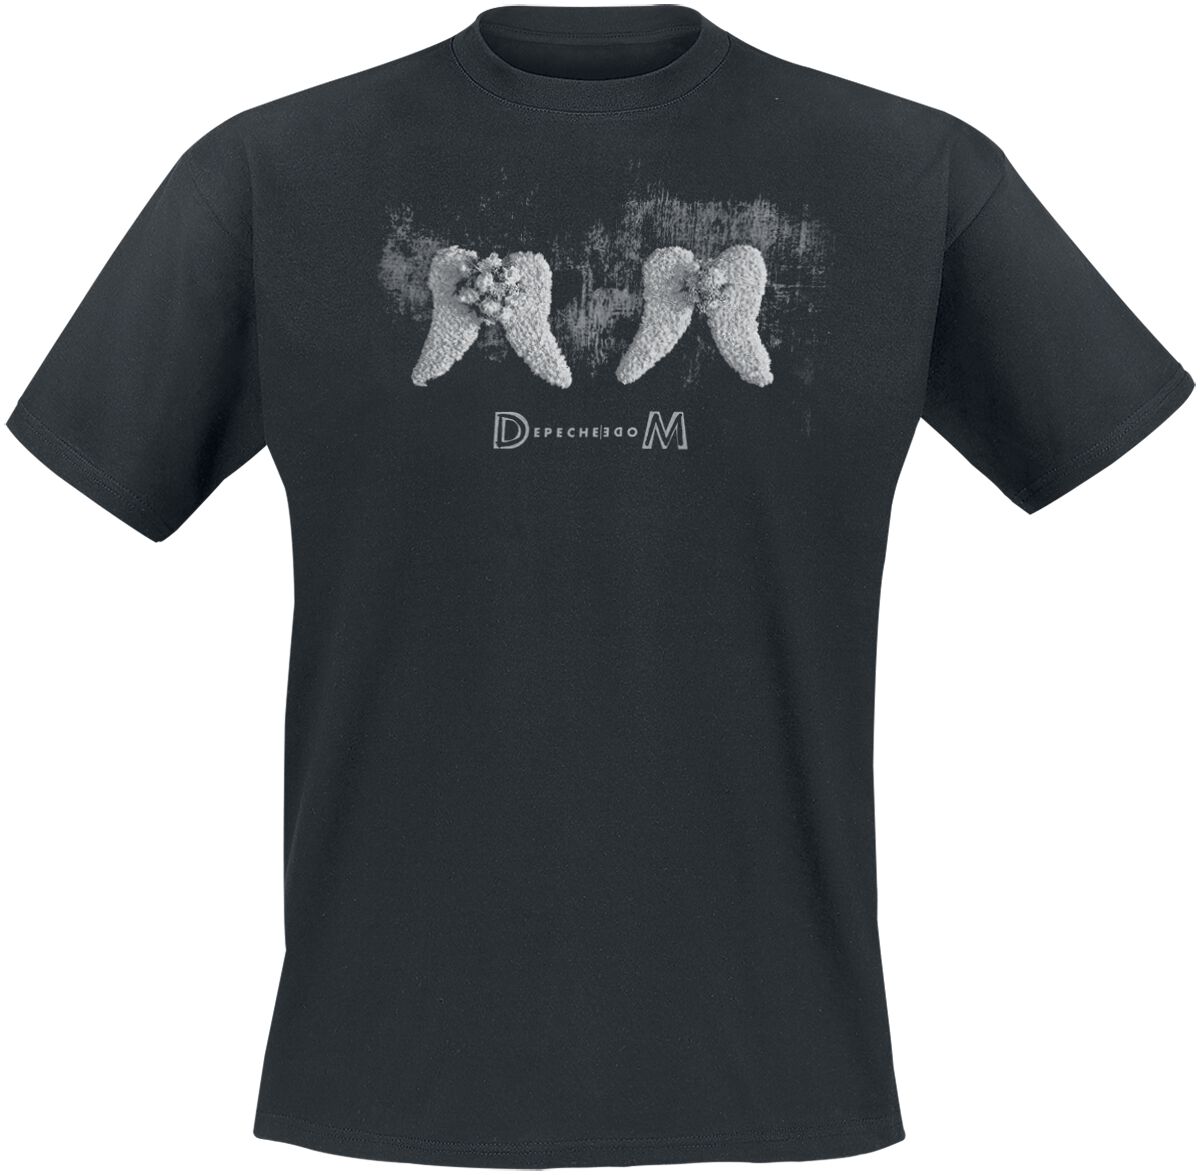 Depeche Mode T-Shirt - Dual Wings - XXL - für Männer - Größe XXL - schwarz  - Lizenziertes Merchandise!